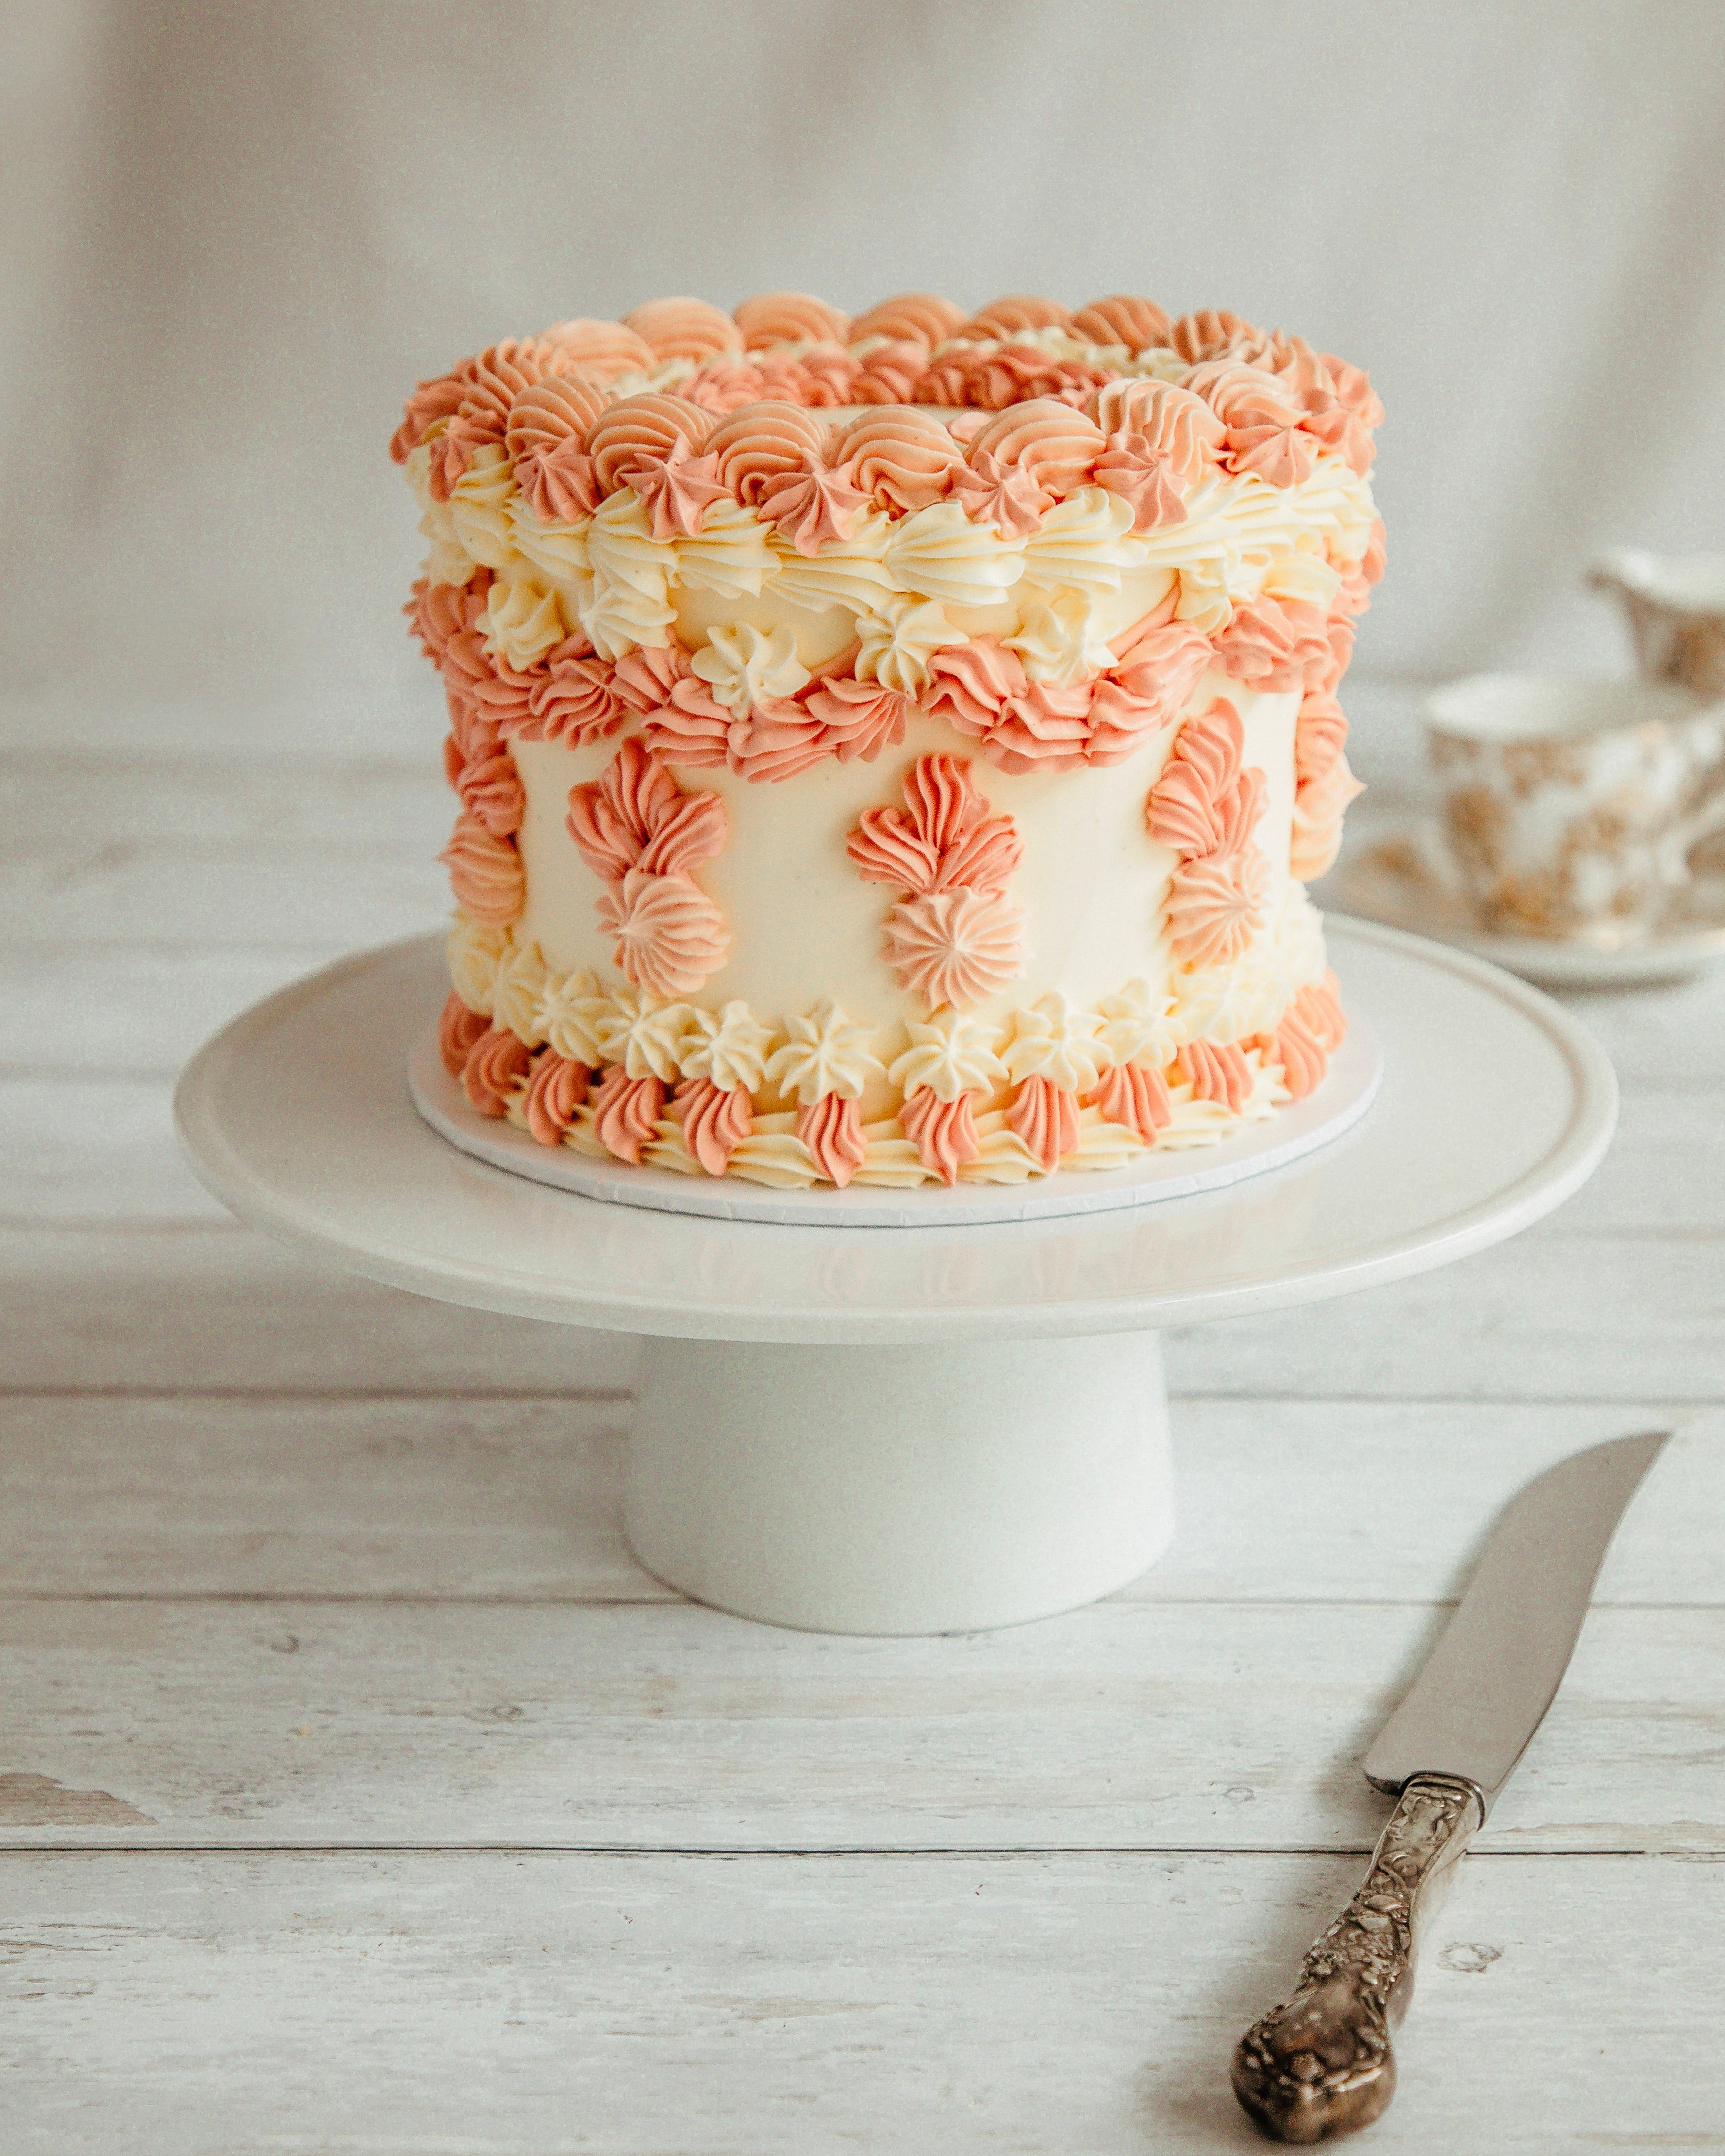 Happy Birthday double layer cake topper